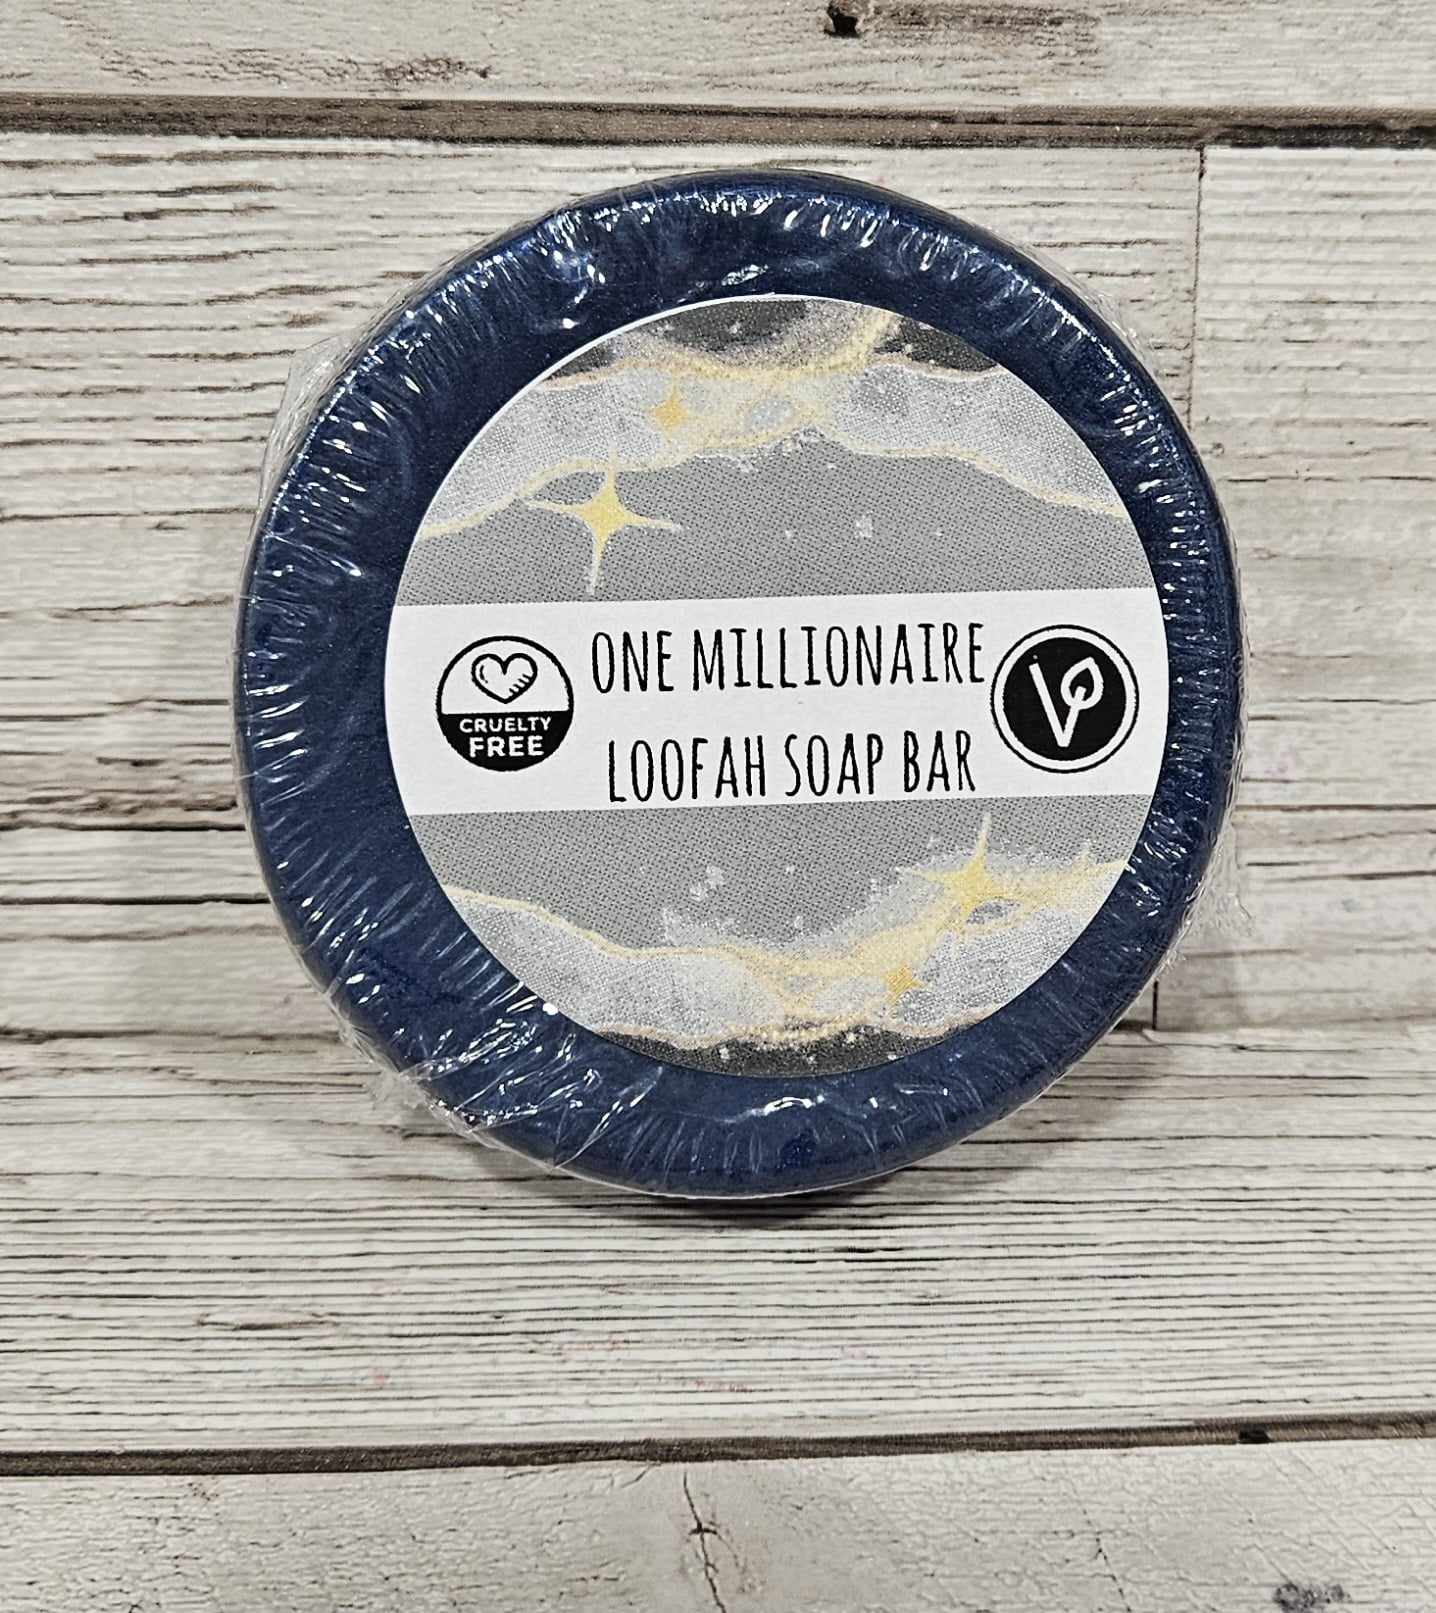 'One Millionaire' Loofah Soap Bar